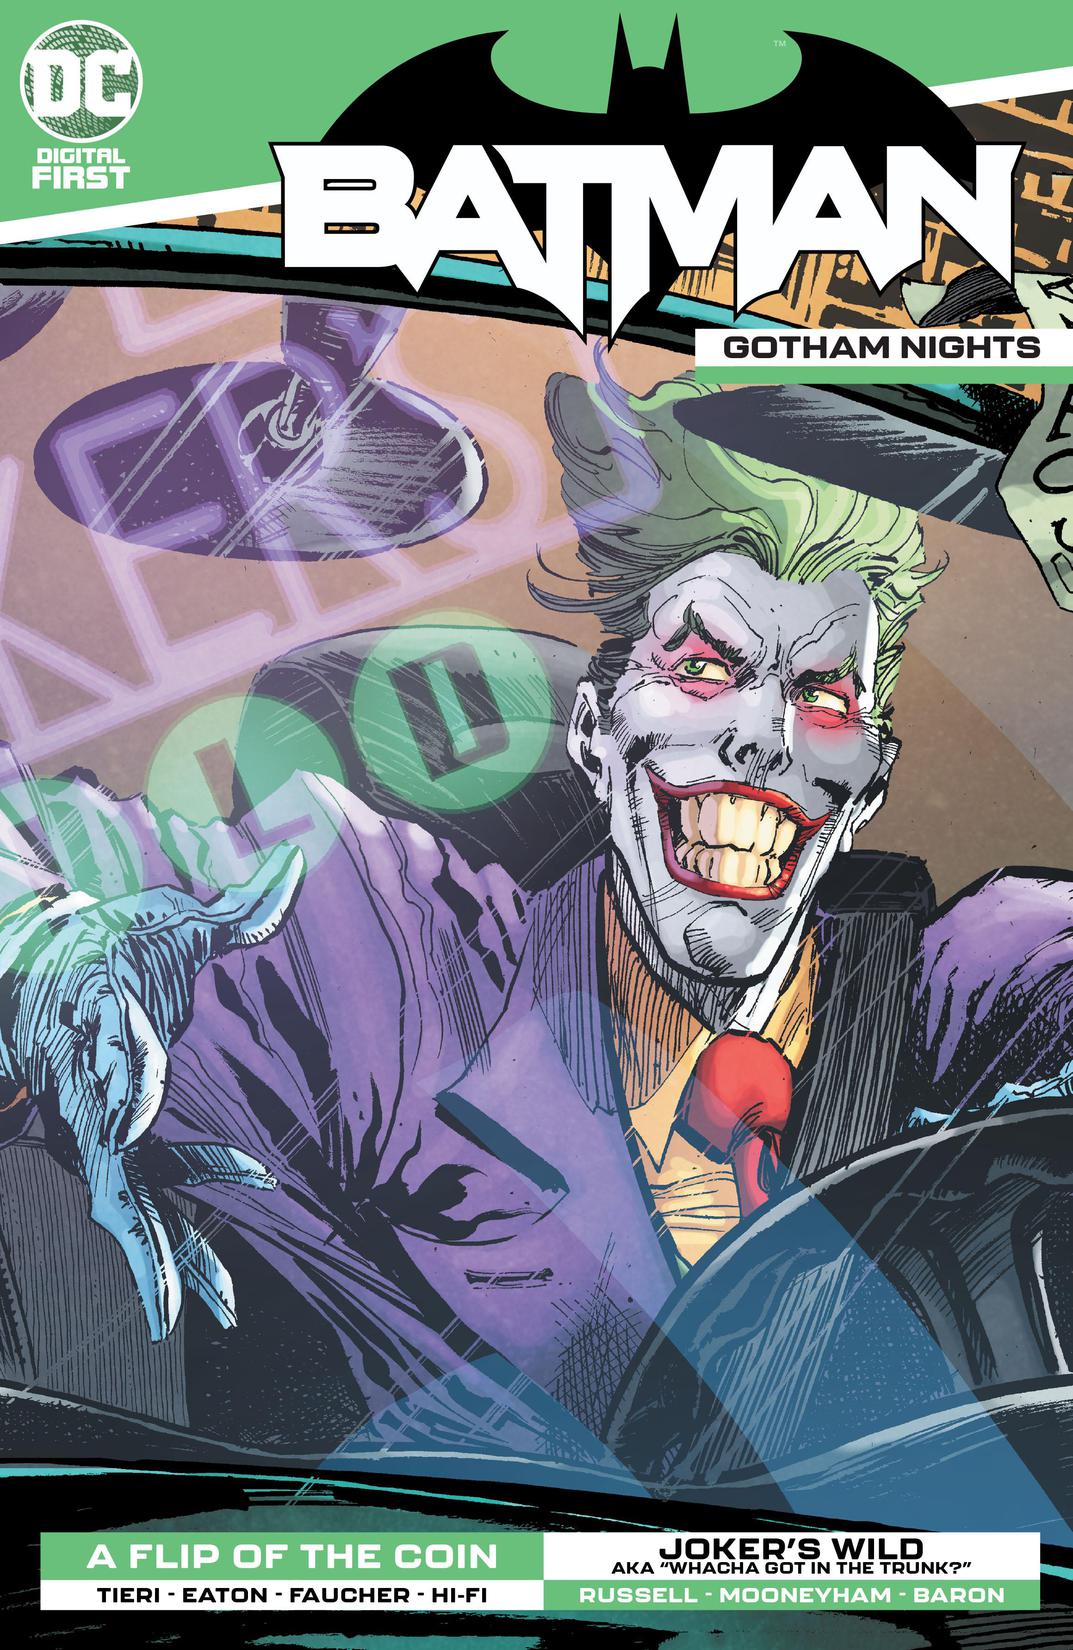 Batman: Gotham Nights #9 preview images